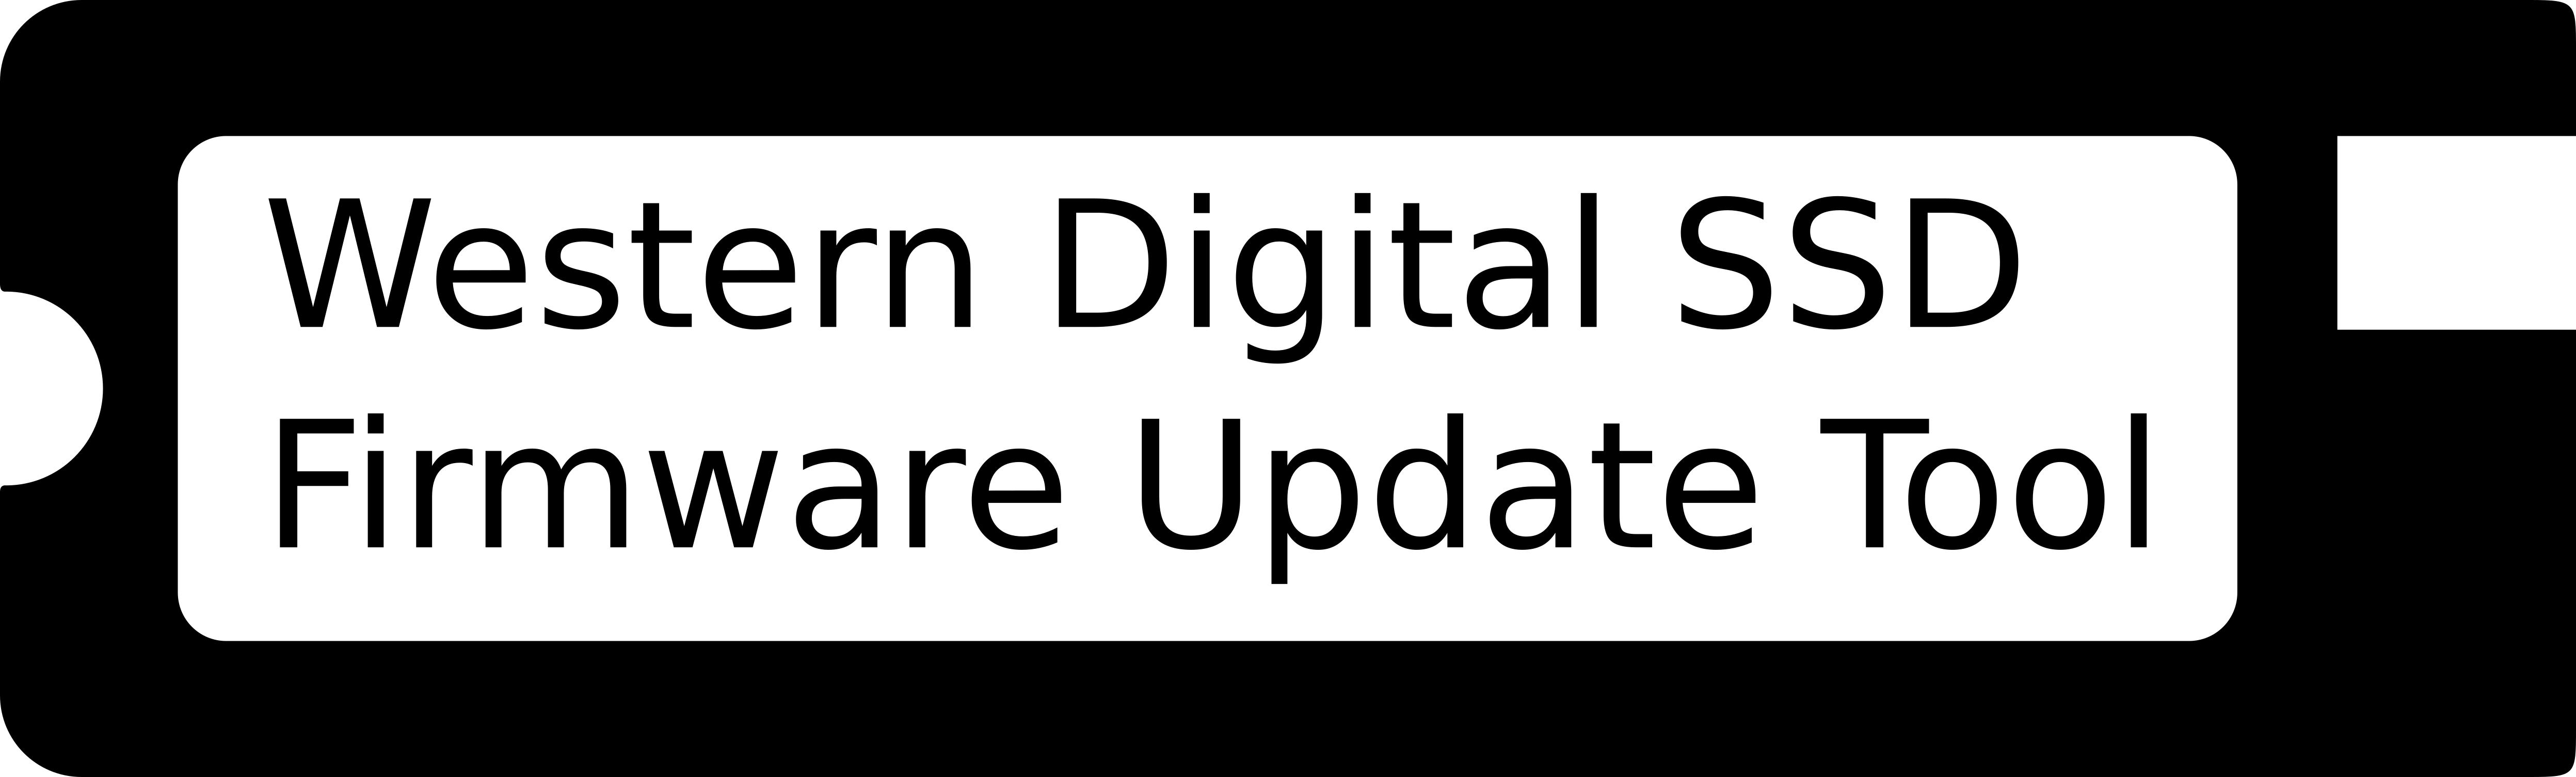 Western Digital SSD Firmware Update Tool